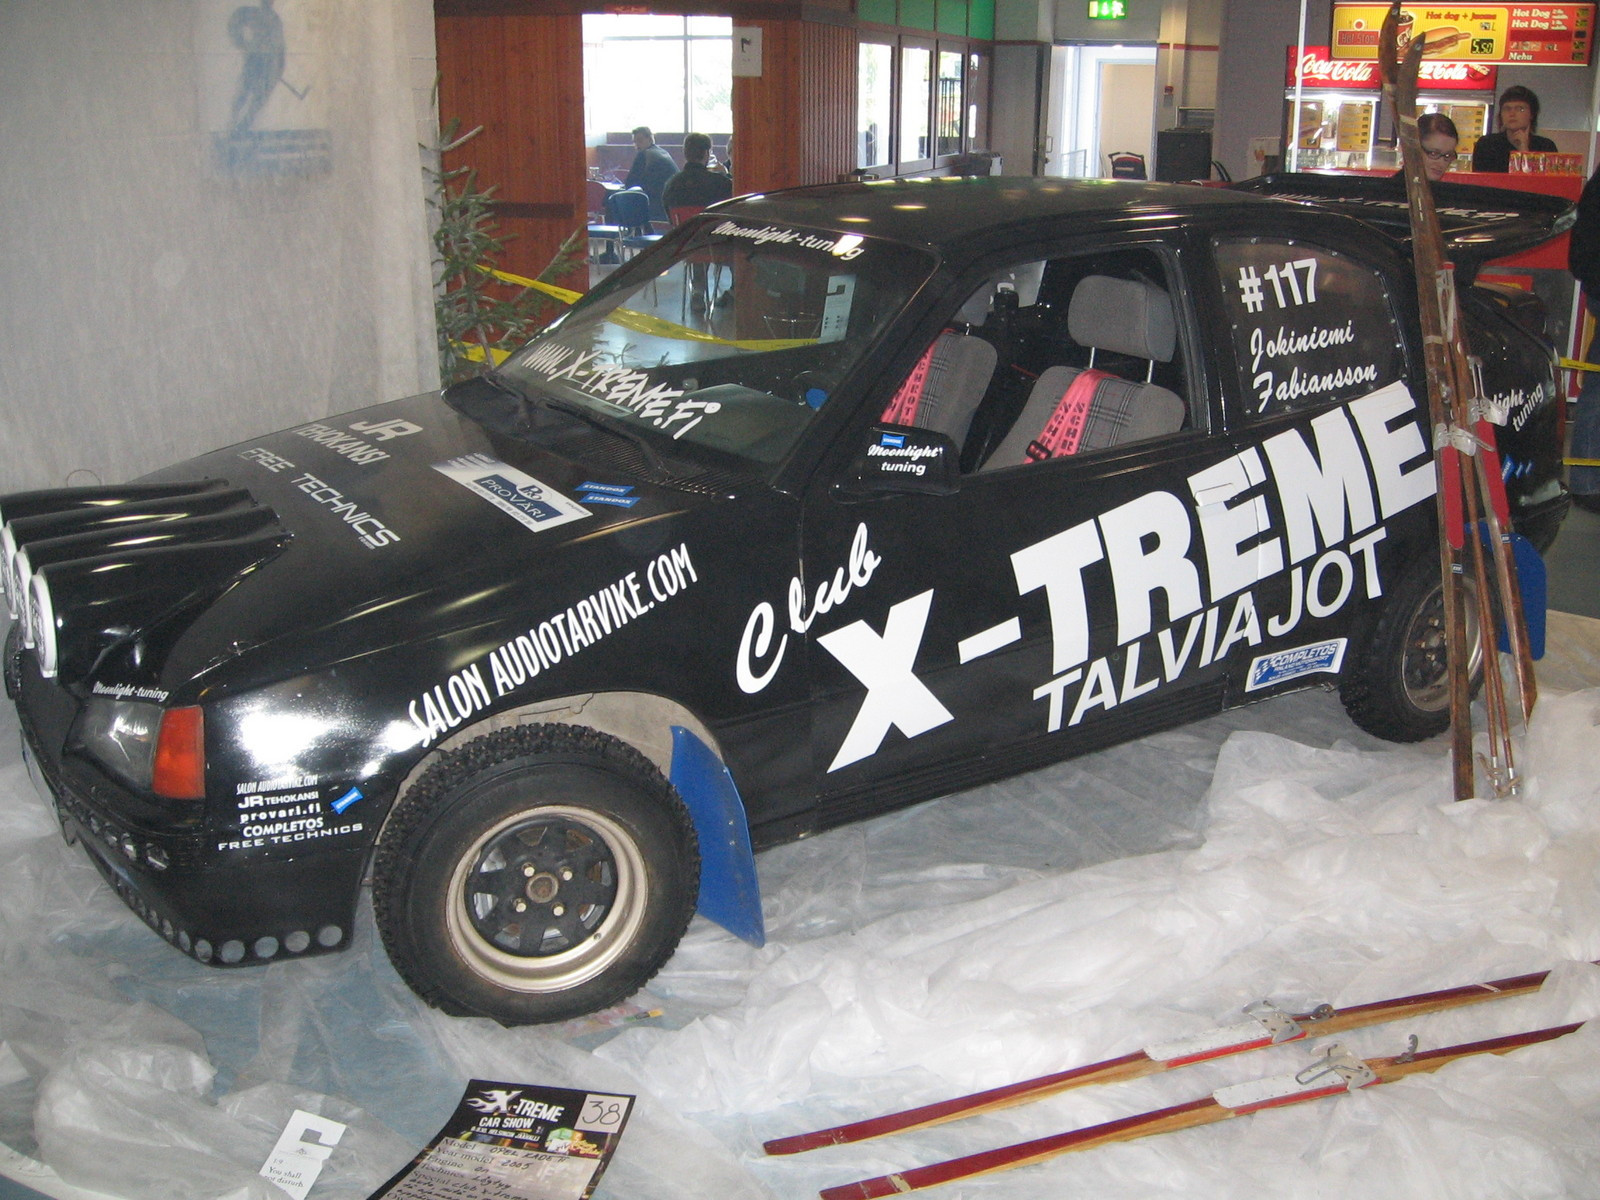 X-treme Car Show 9.10.2005, Jokiniemi Fabiansson Opel Kadett, Club X-Treme talviajot